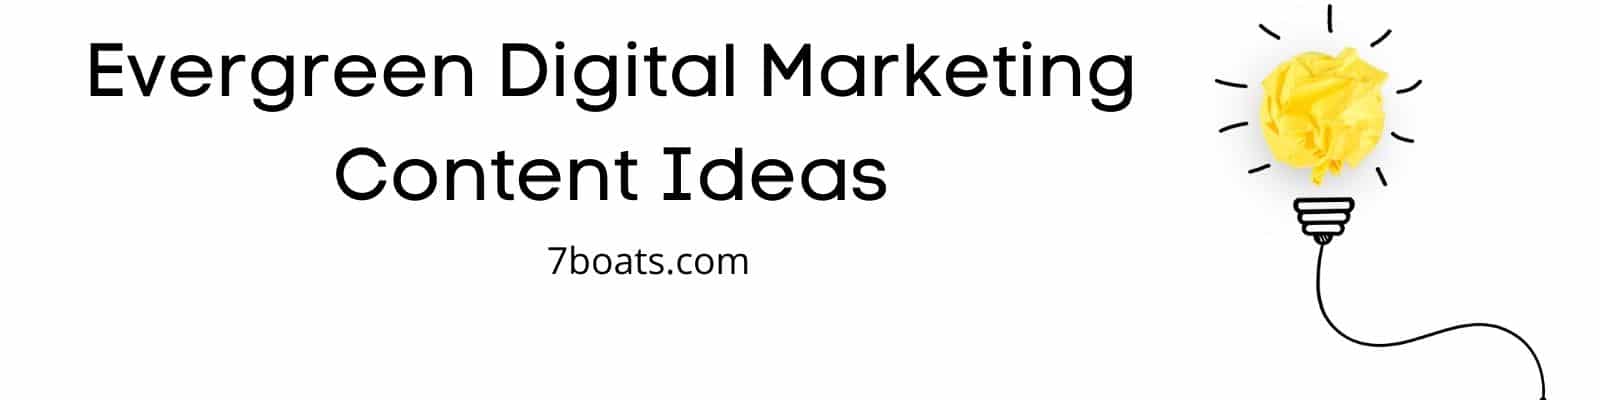 Evergreen Digital Marketing Content Ideas - 7boats